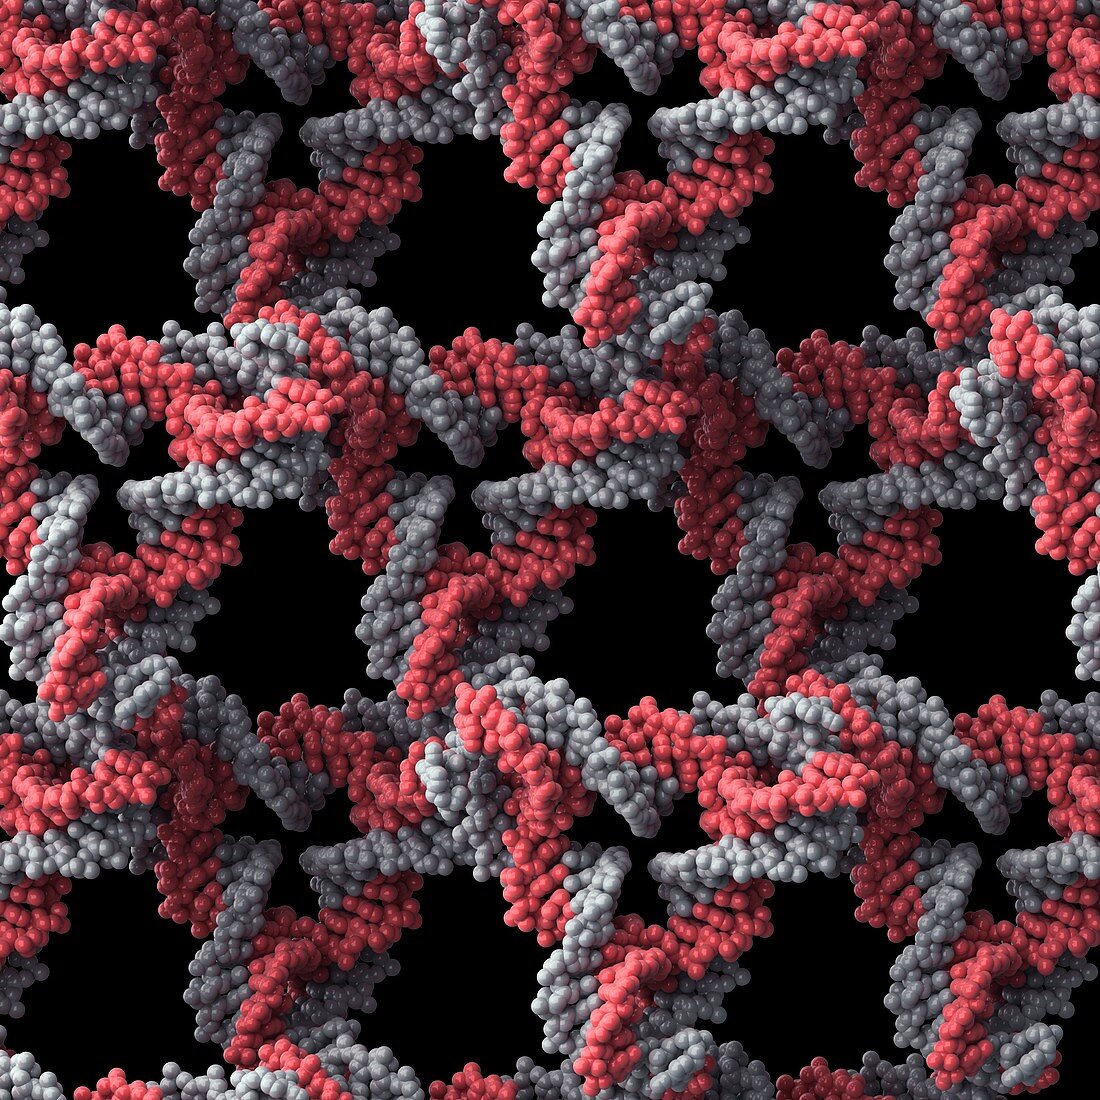 DNA crystal lattice